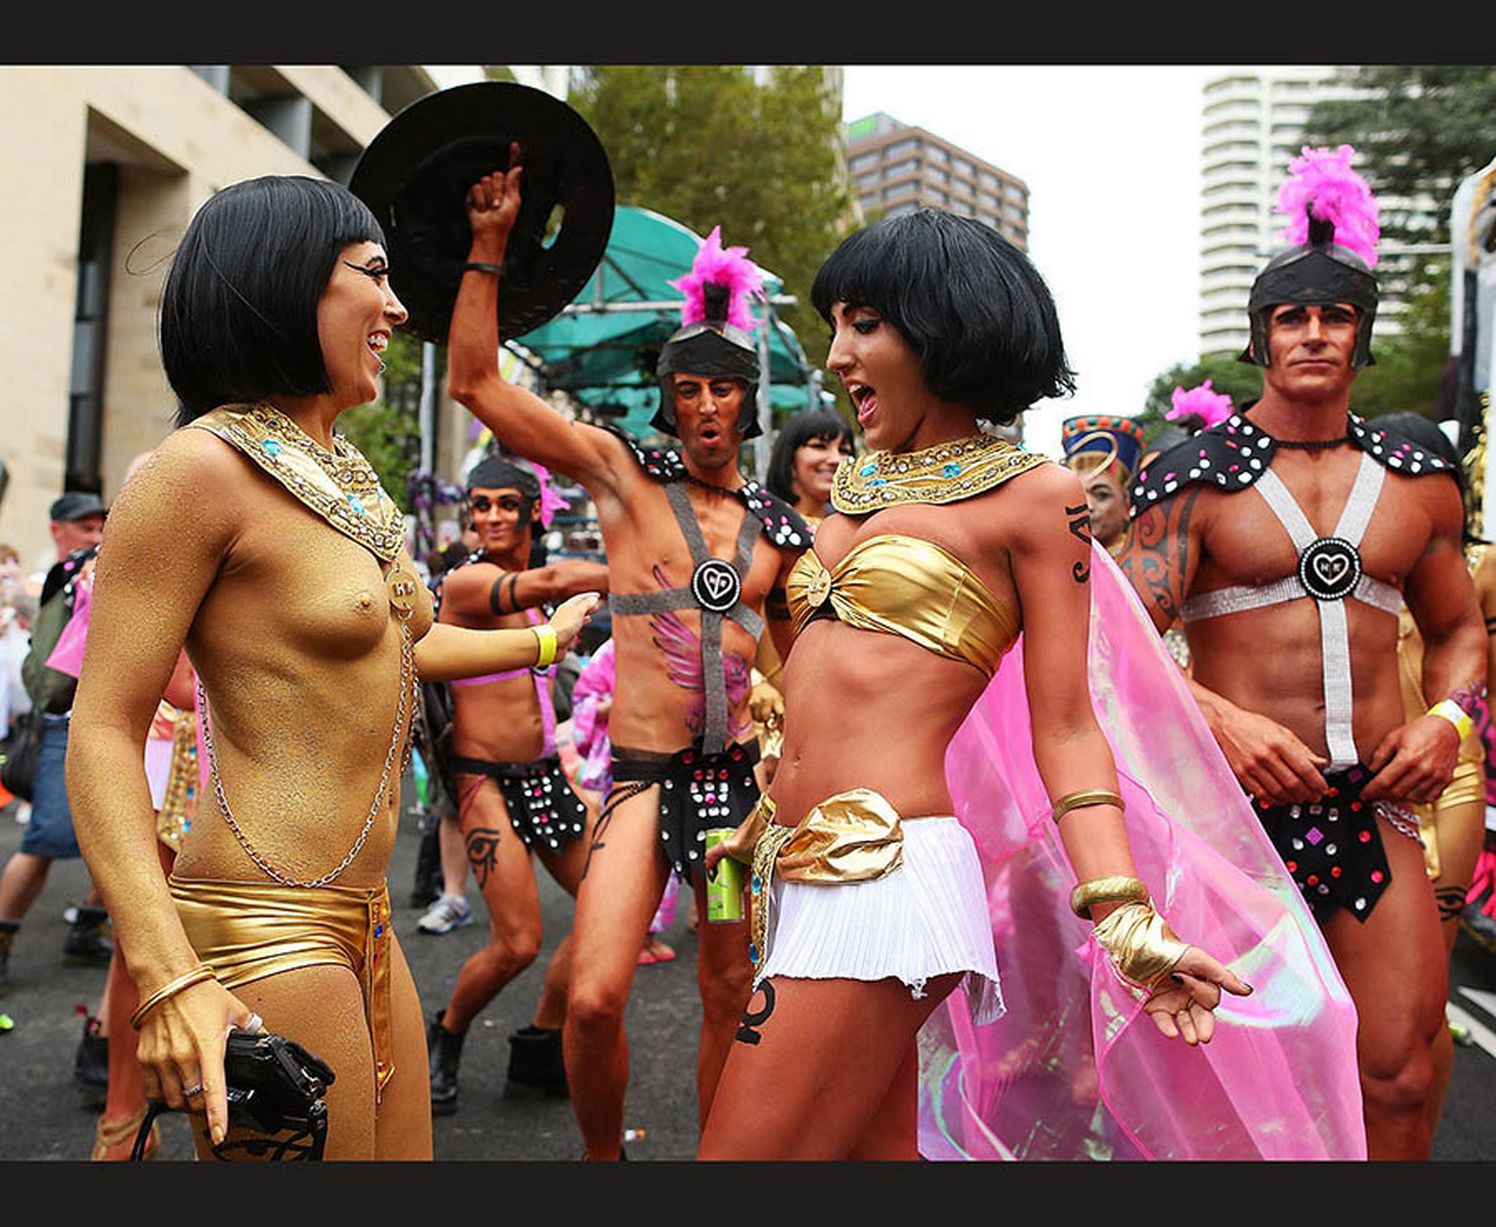 andrea morrish recommends Mardi Gras Nude Pictures